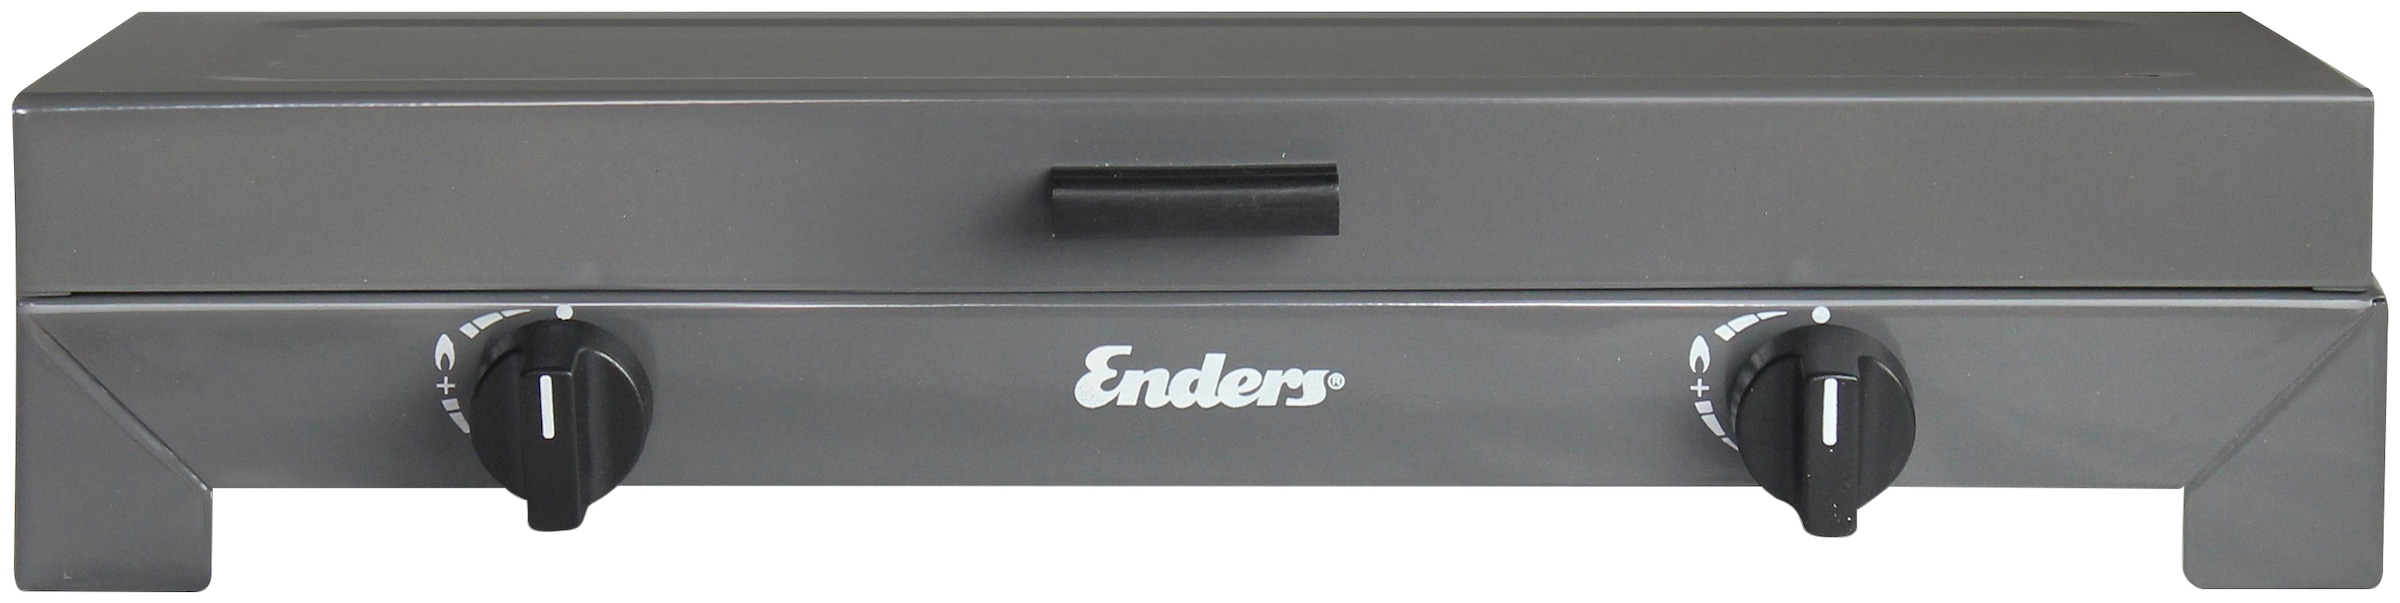 Enders® Gaskocher »Canberra 2«, Stahl, 43 cmx26 cm, BxLxH: 43x26x10 cm, 2 x 2,3 kW Brenner